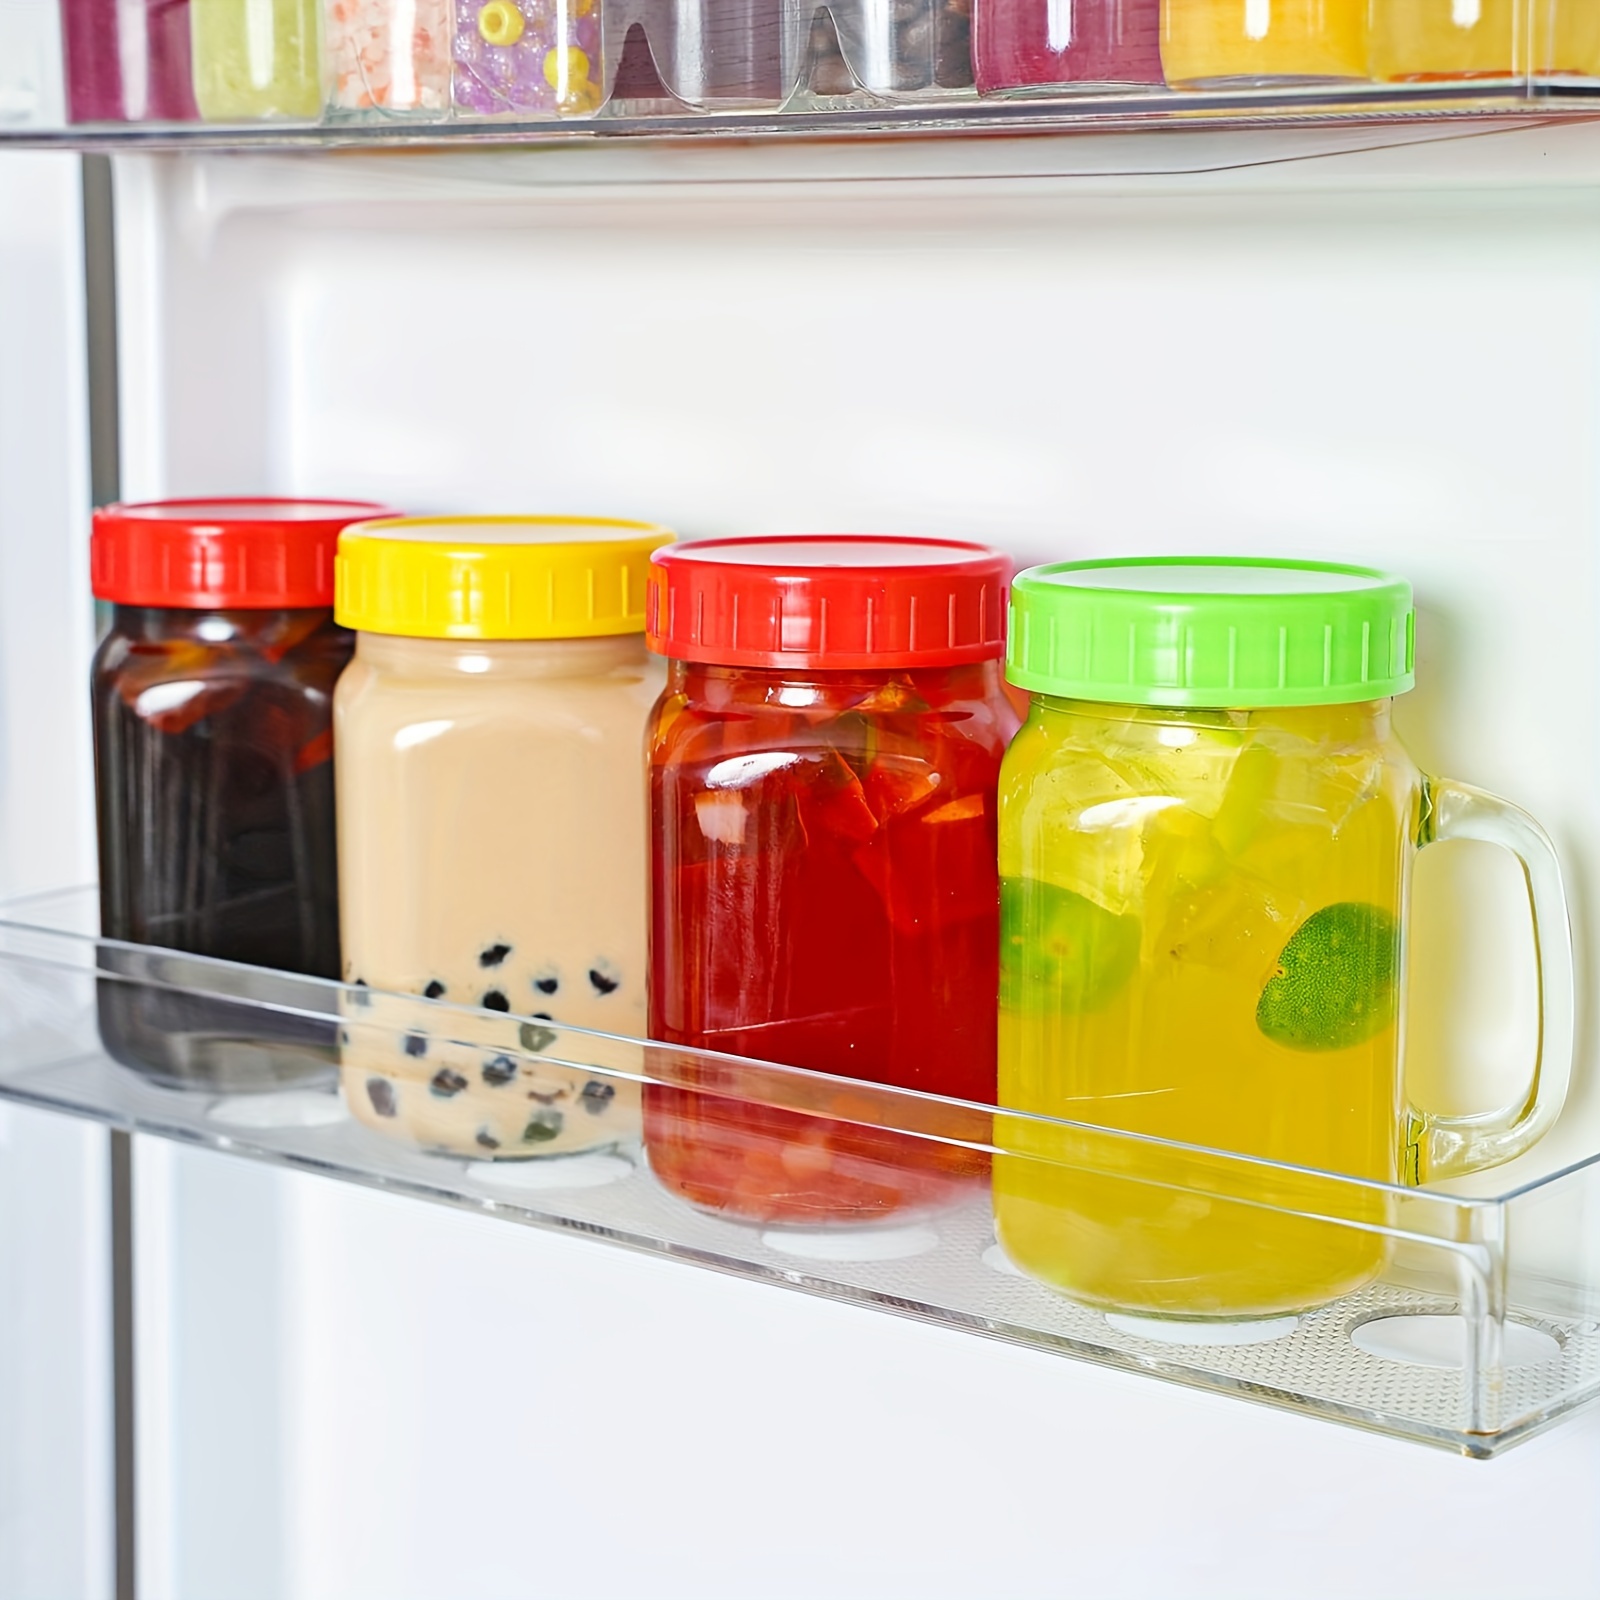 Glass Mason Jar Drinking Mugs w/ Handles & Reusable Colorful